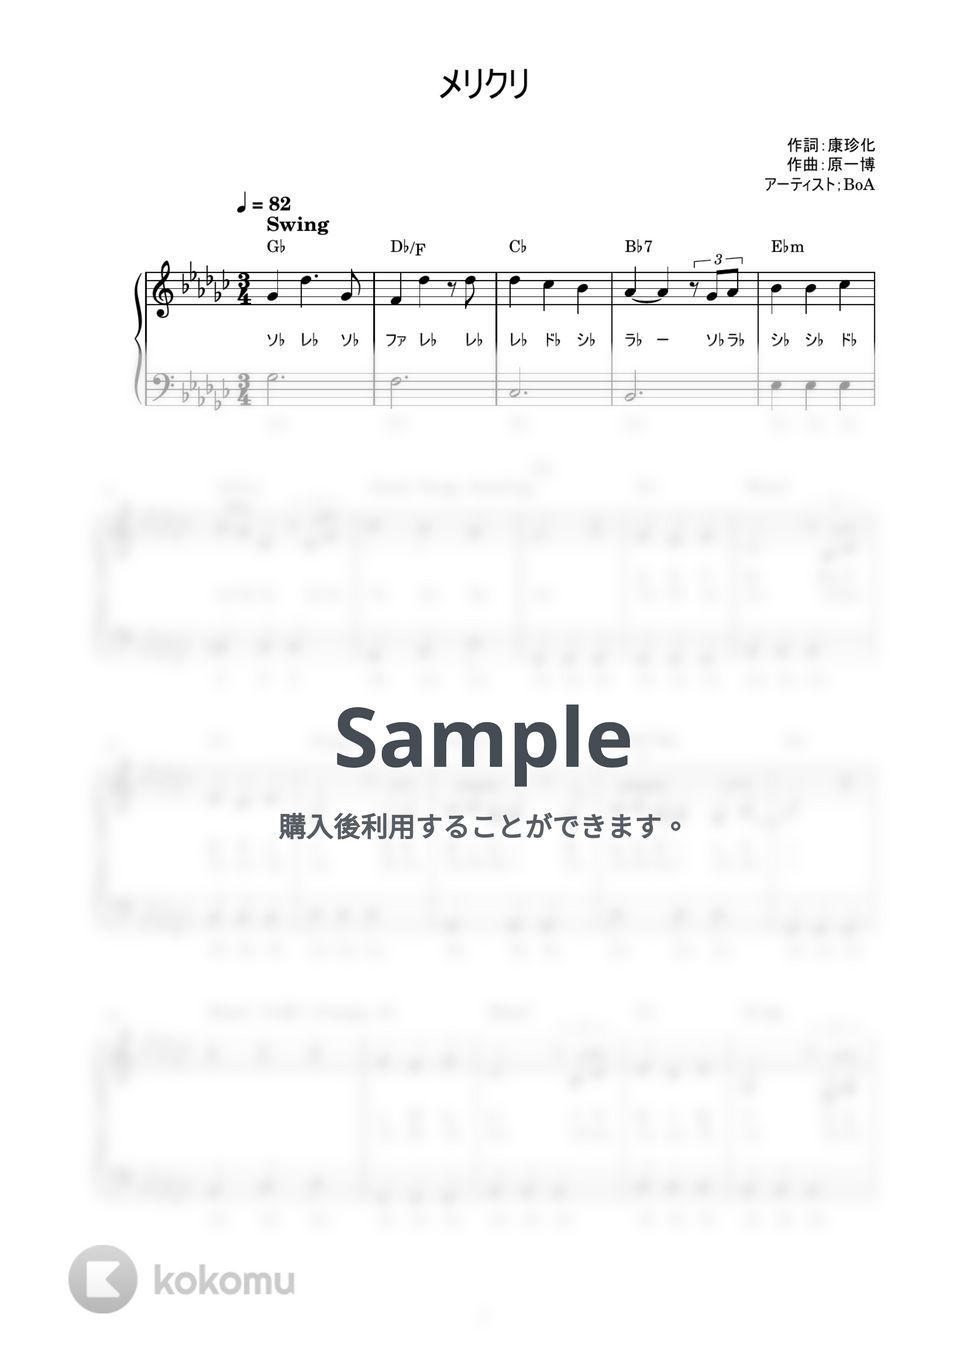 BoA - メリクリ (かんたん / 歌詞付き / ドレミ付き / 初心者) by piano.tokyo